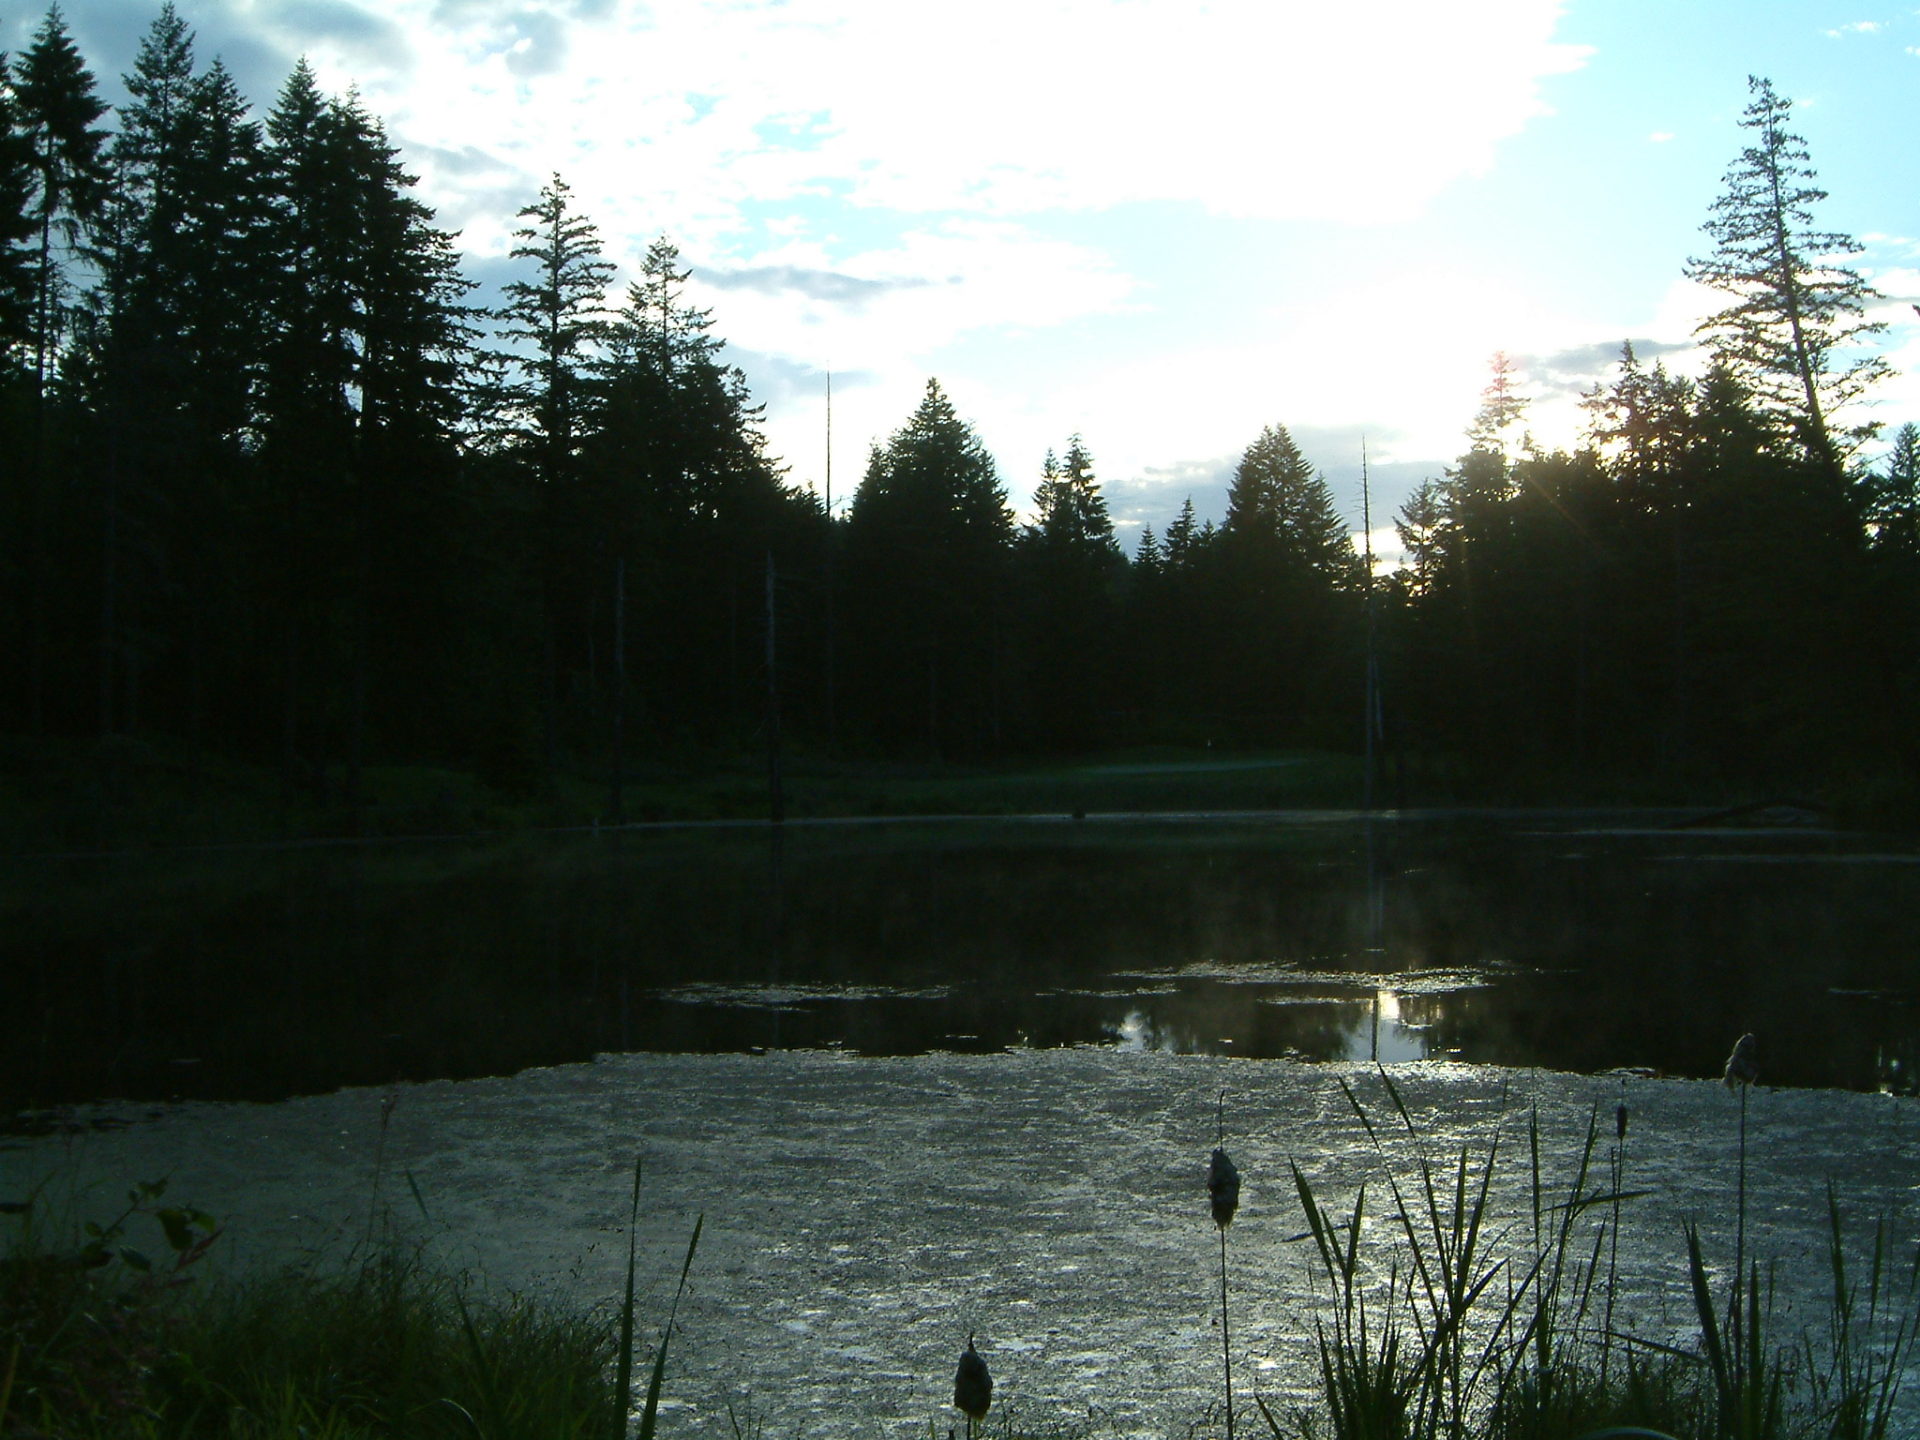 Sunrise at bullfrog pond